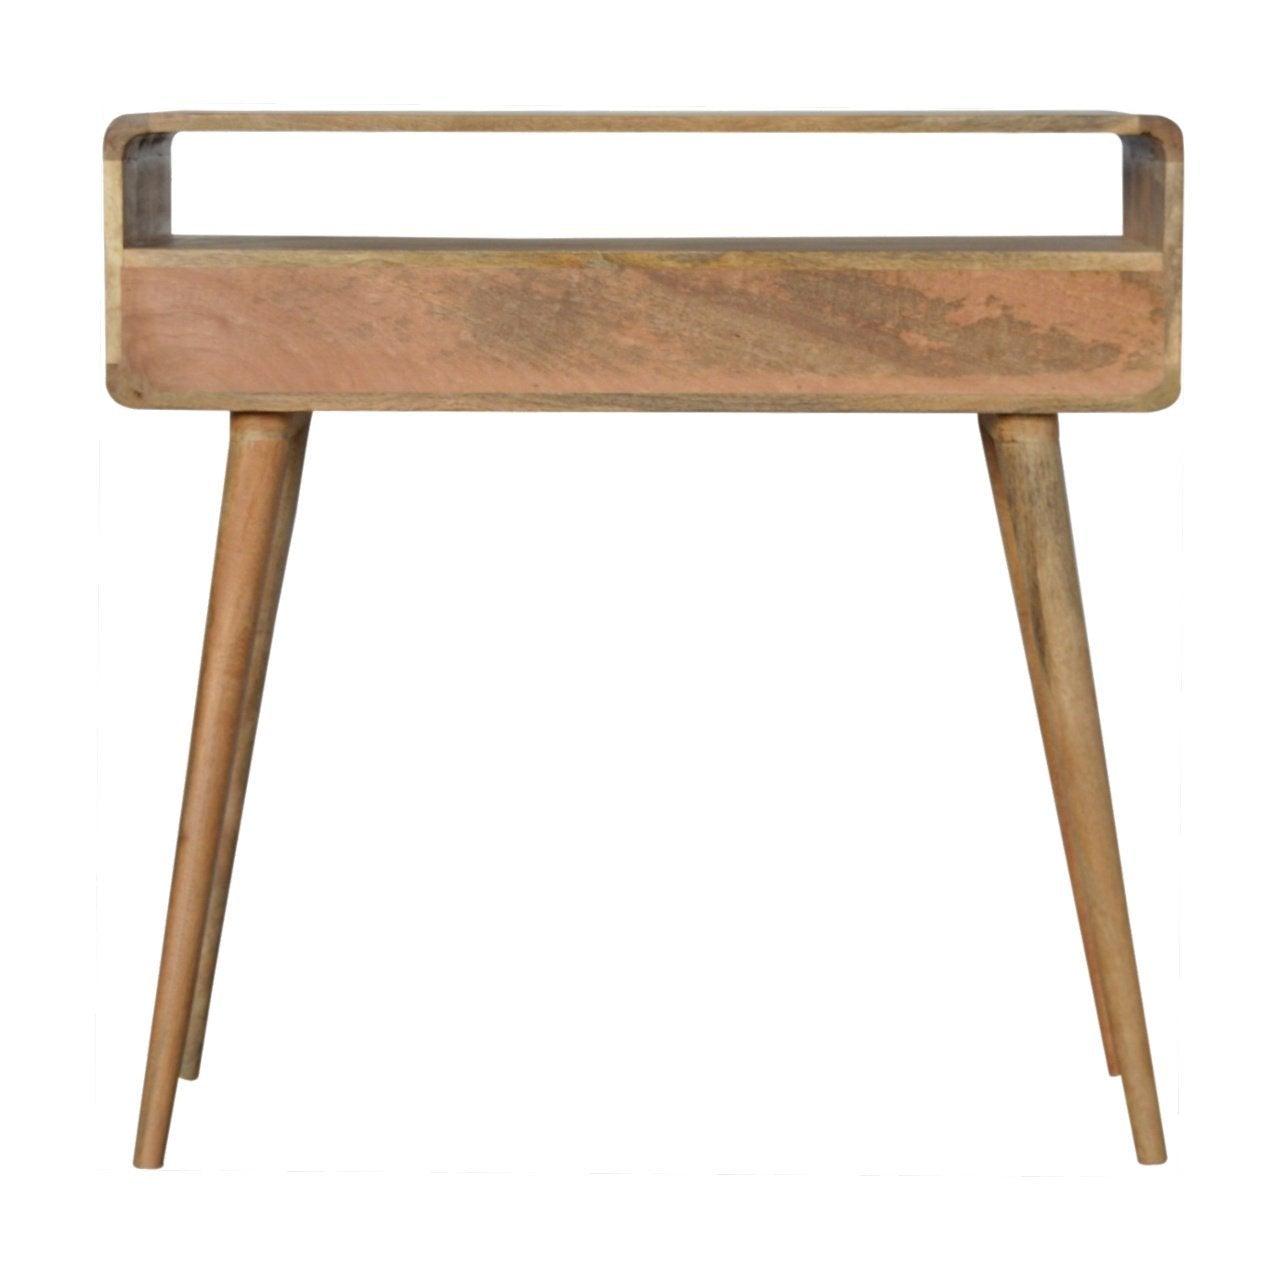 Curved oak-ish console table - crimblefest furniture - image 10